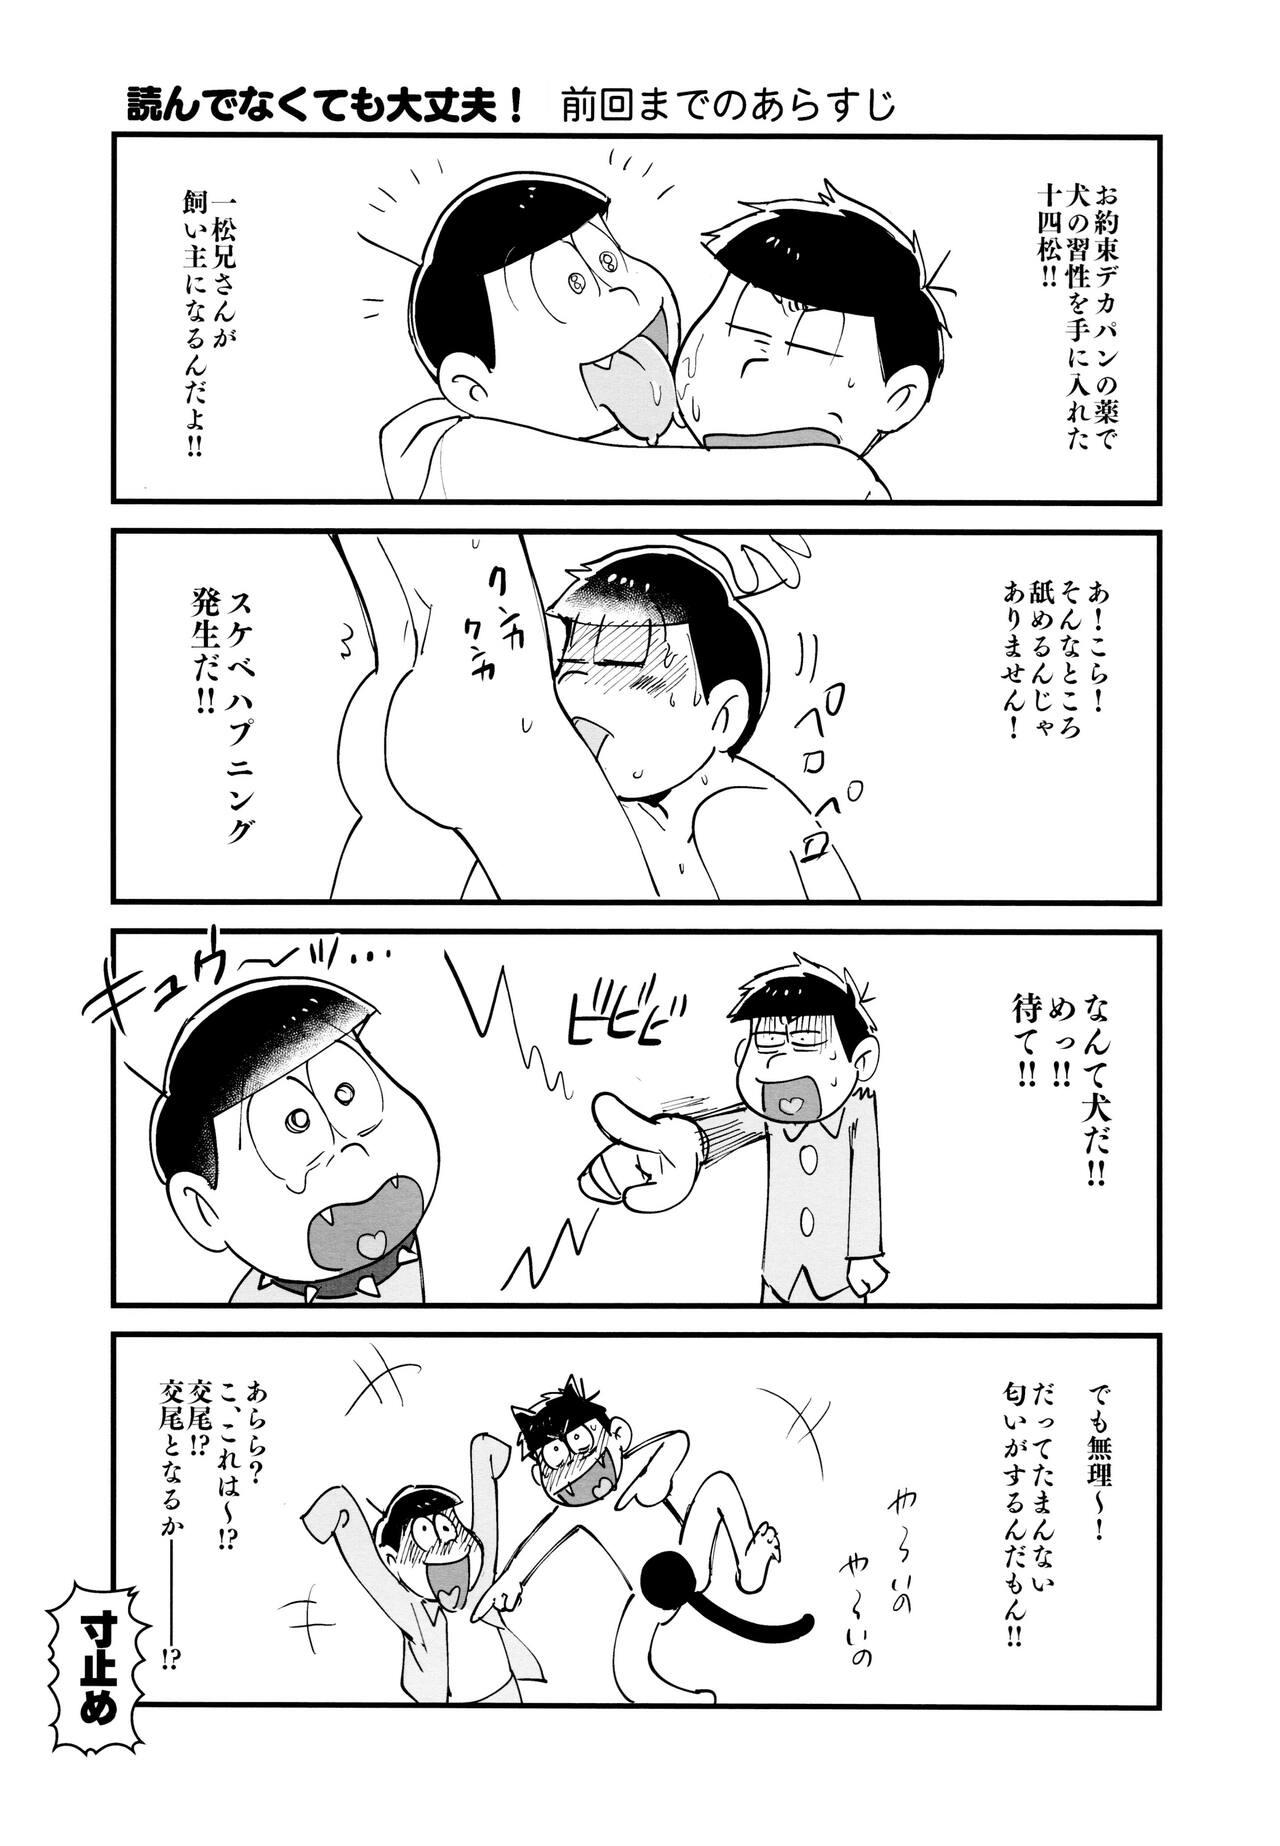 Gaycum jacobson error2 - Osomatsu-san Reverse - Page 4